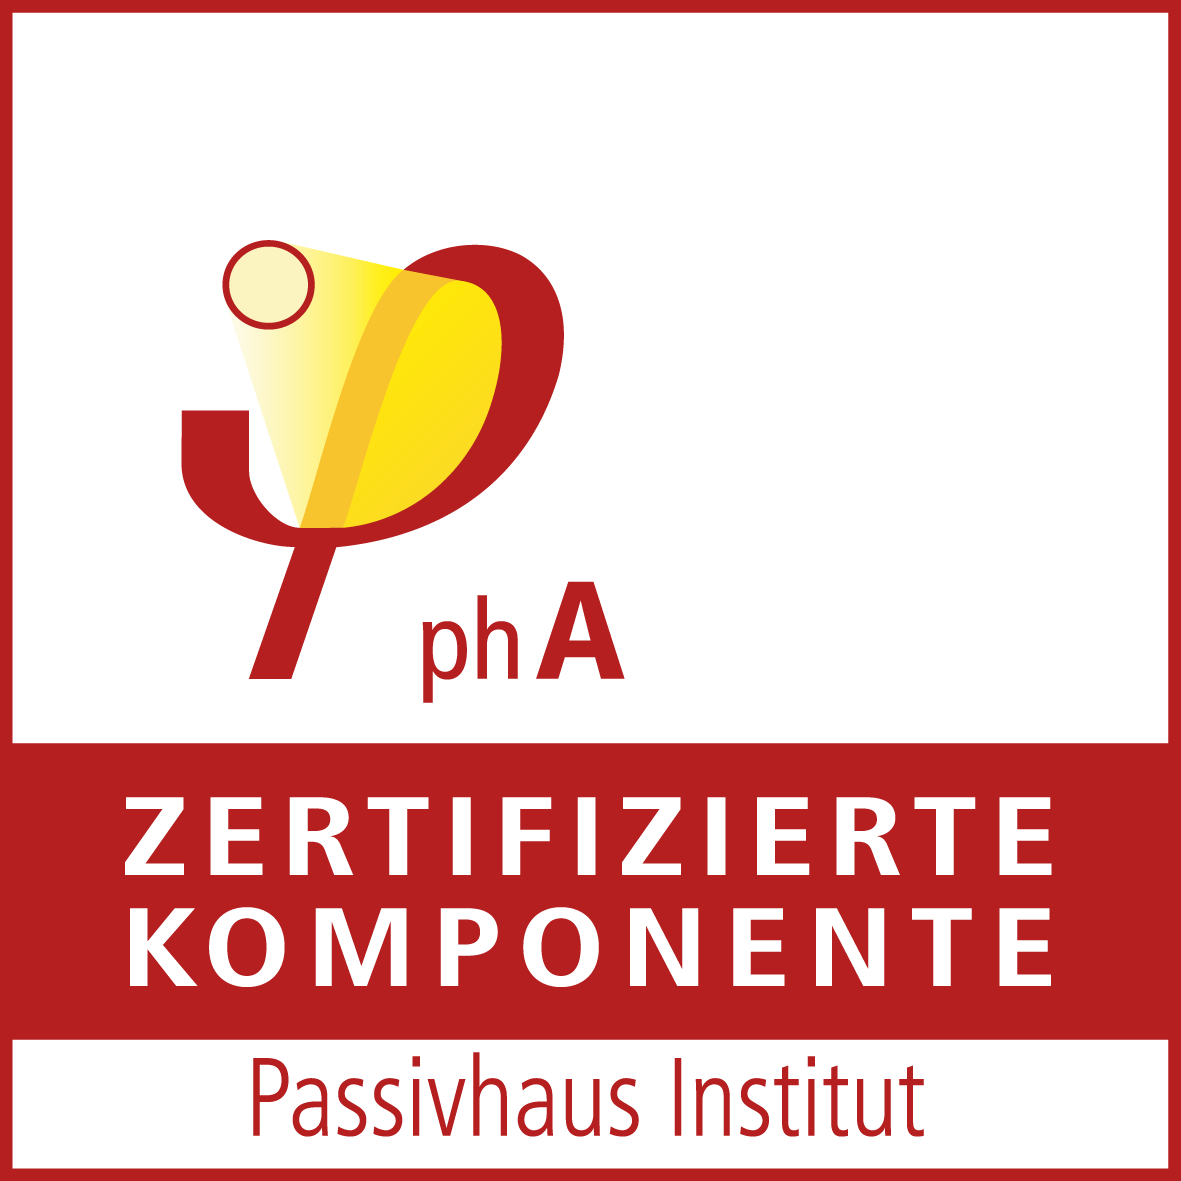 Passivhaus phA logo DE.png